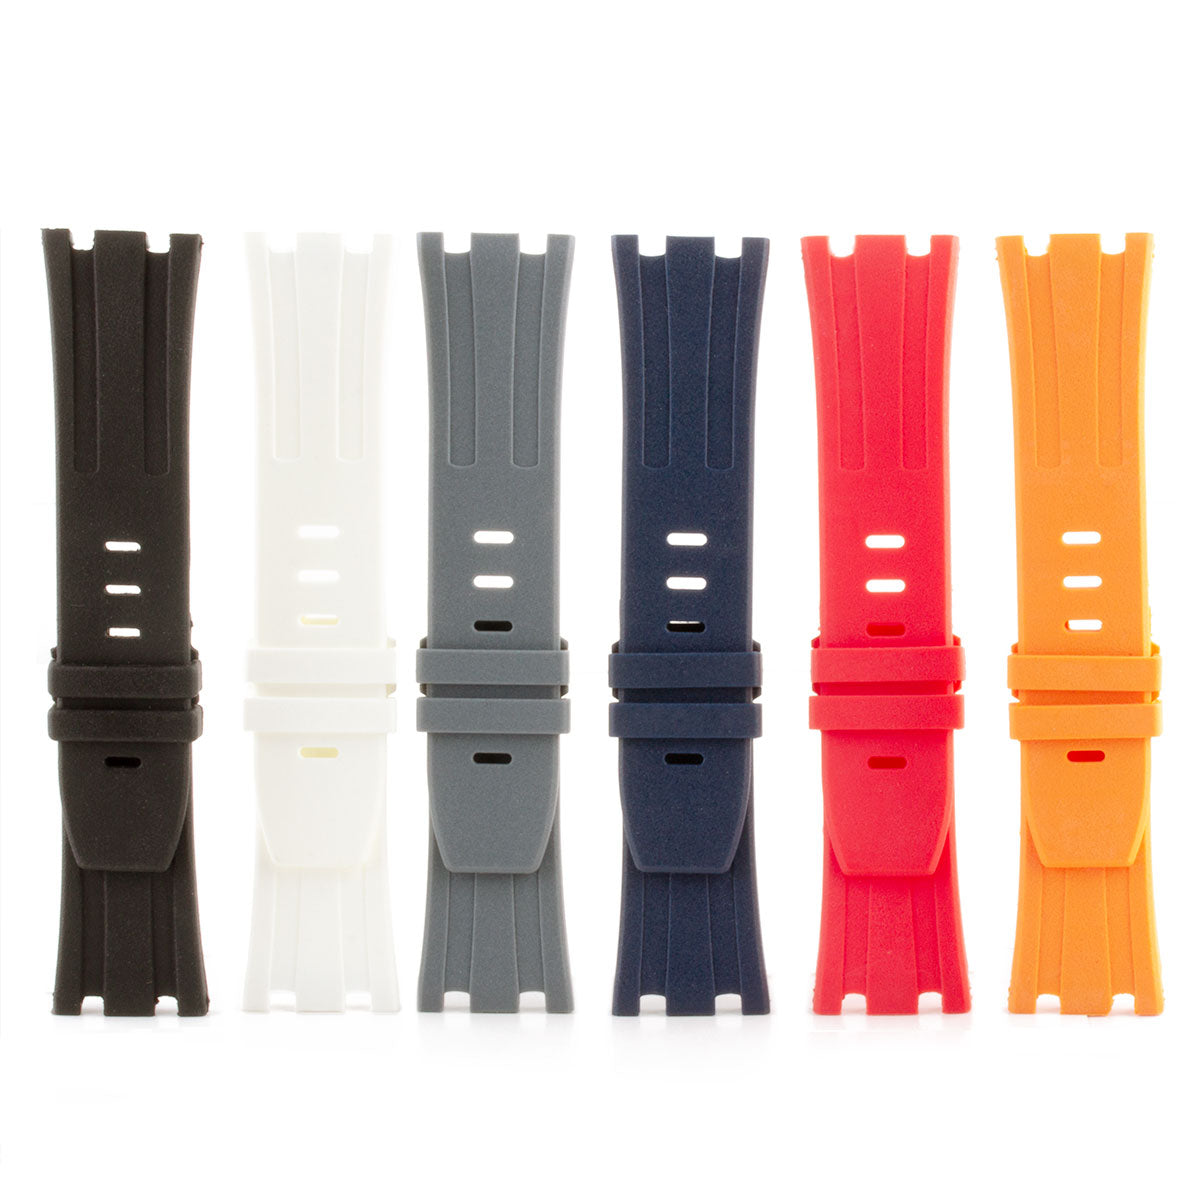 Audemars Piguet Royal Oak Offshore 42mm - "Grip" Rubber integrated watch band (black, white, grey, blue, red, orange)